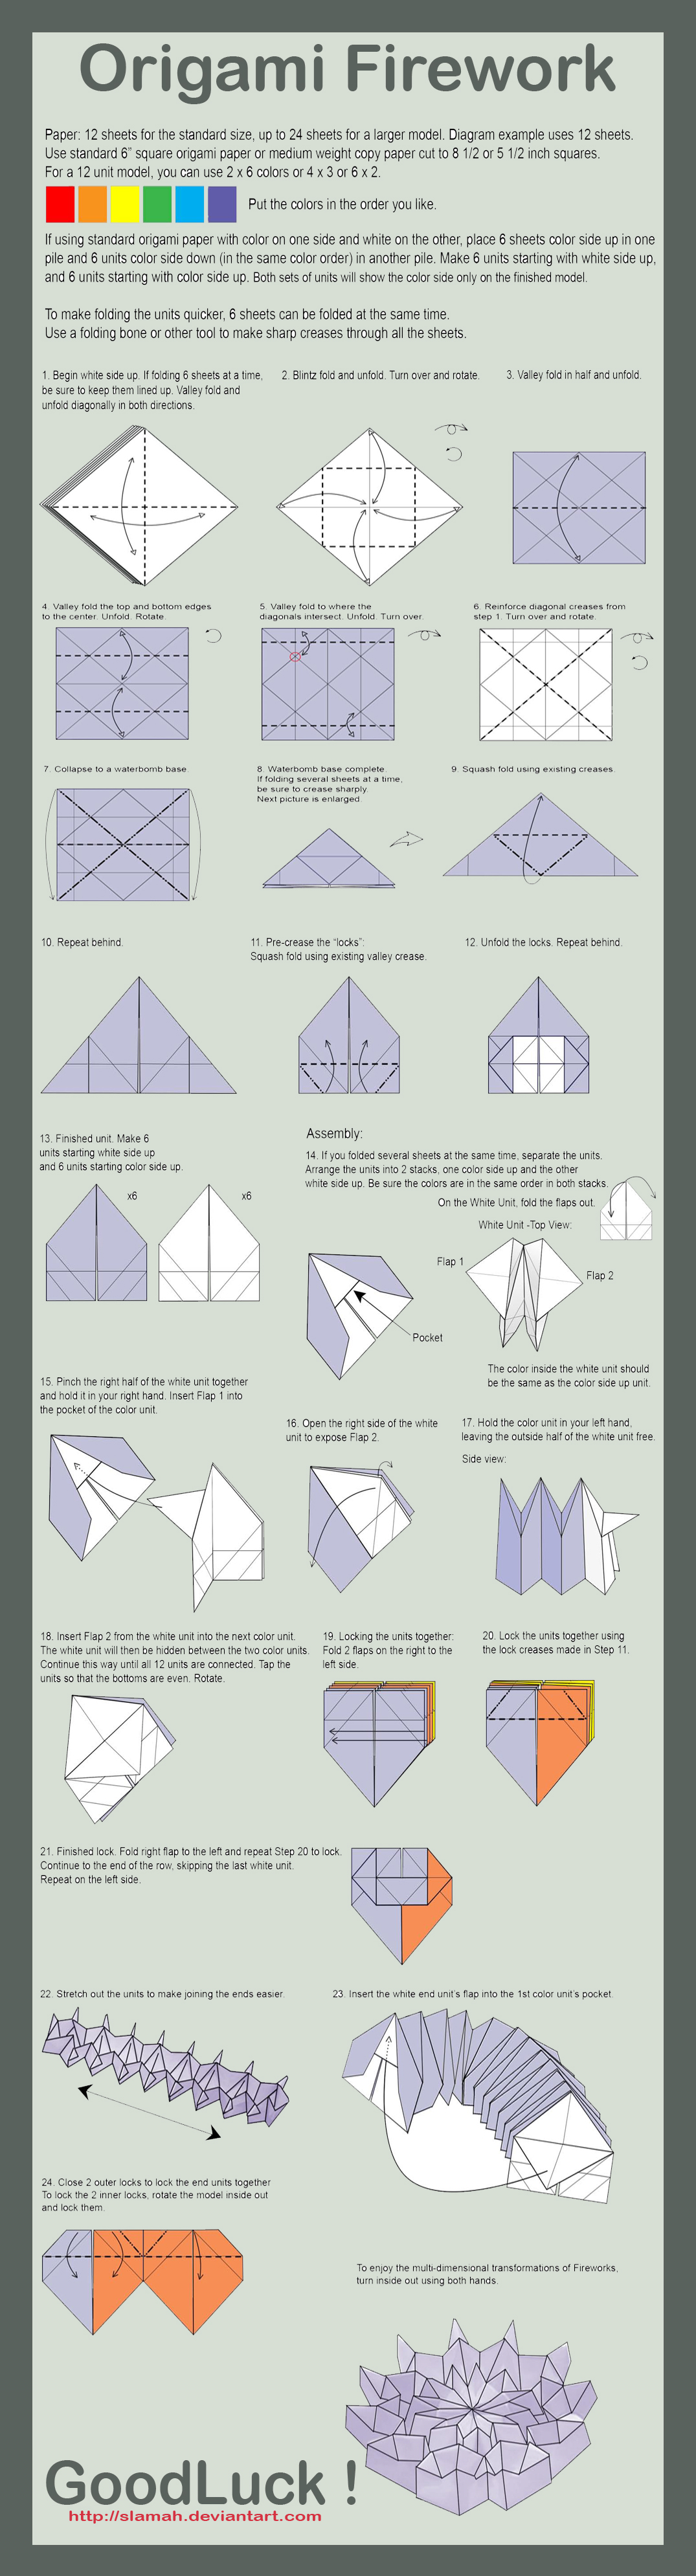 origami firework instructions